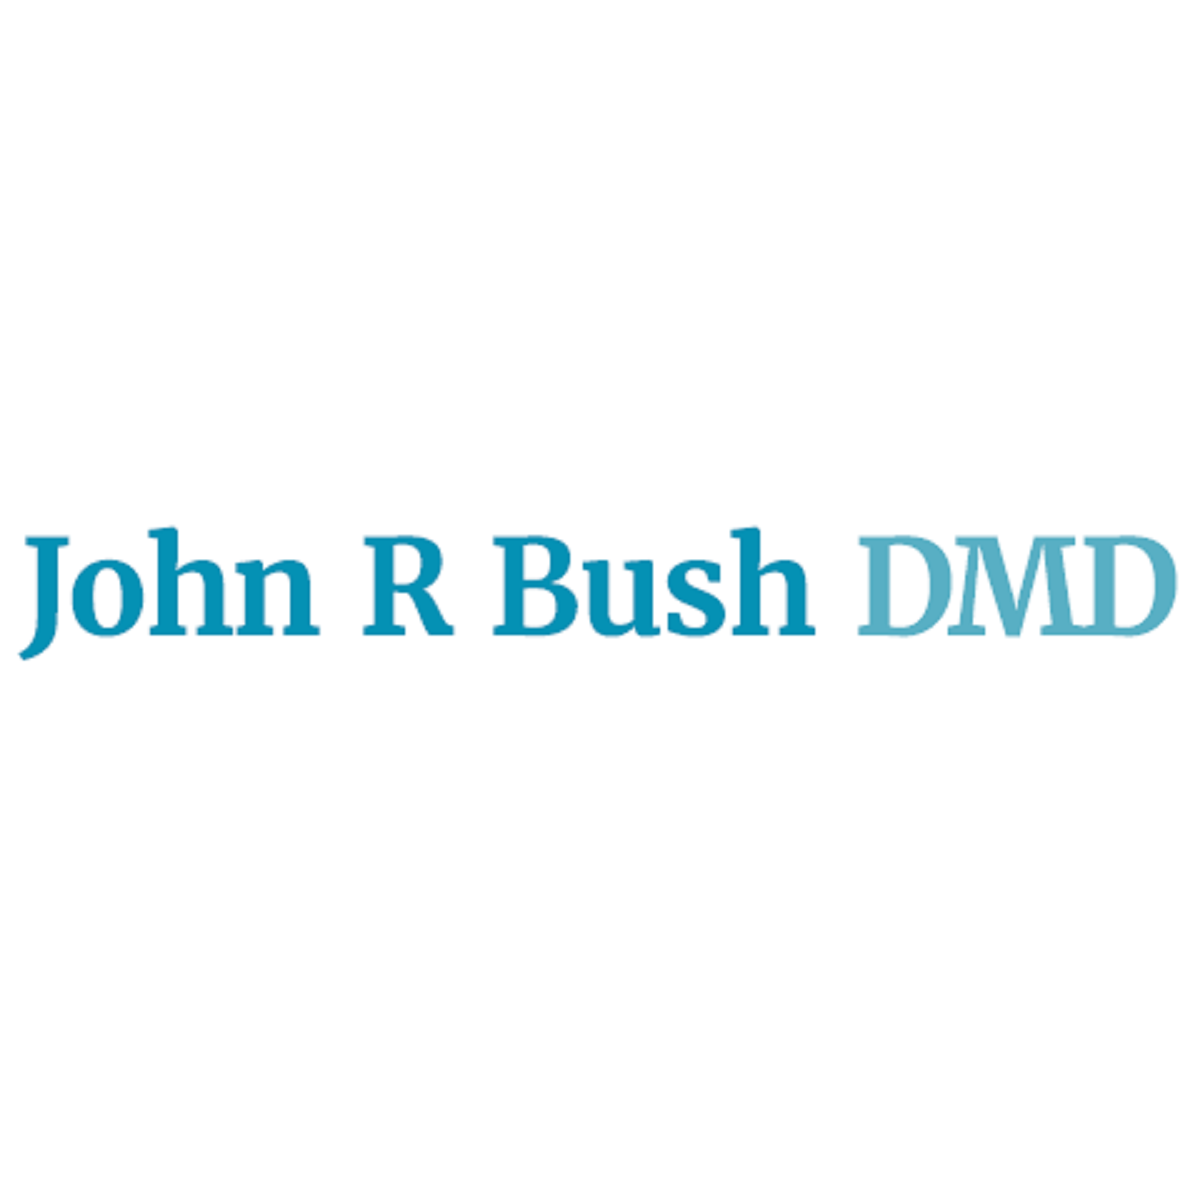 John R Bush DMD - Pittsburgh, PA 15222 - (412)471-4552 | ShowMeLocal.com